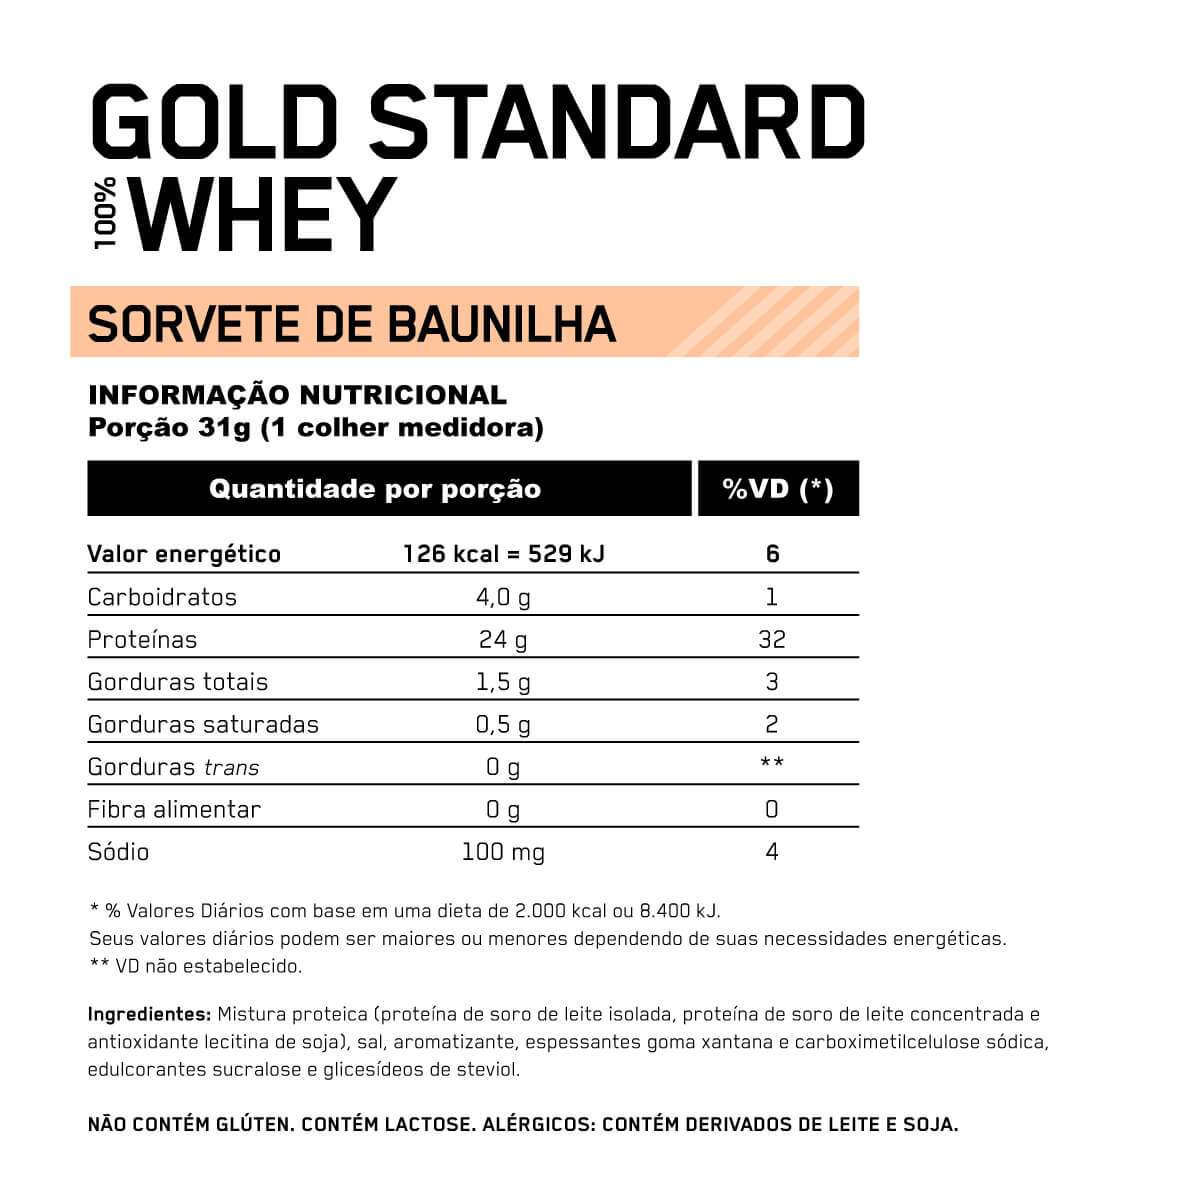 Whey Gold Standard 2,27kg - Optimum Nutrition